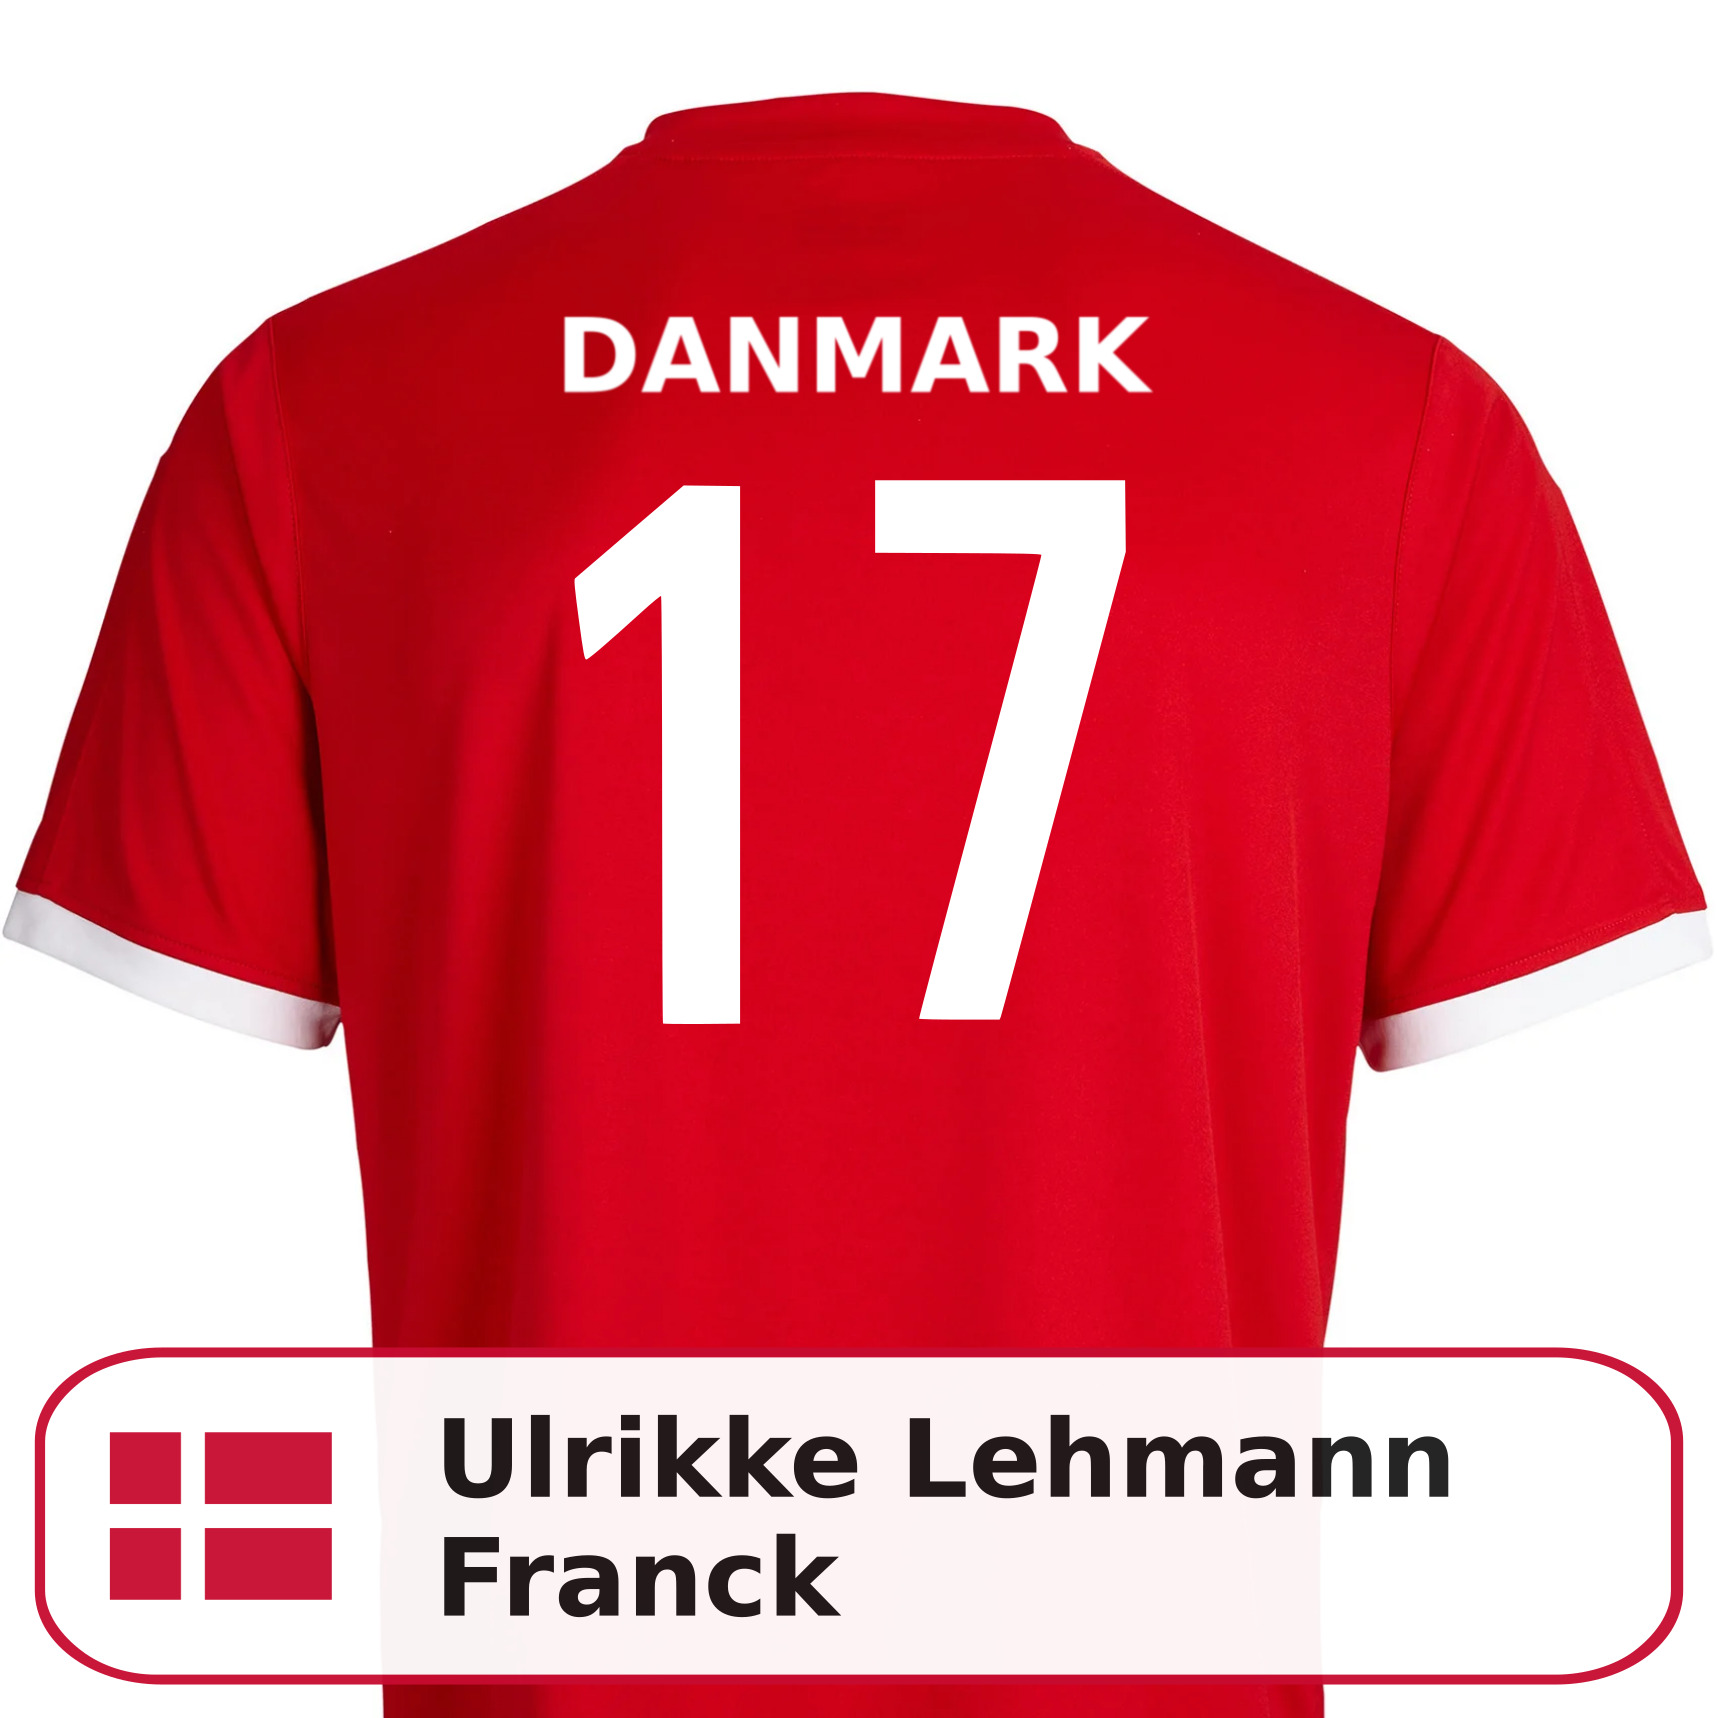 Ulrikke Lehmann Franck